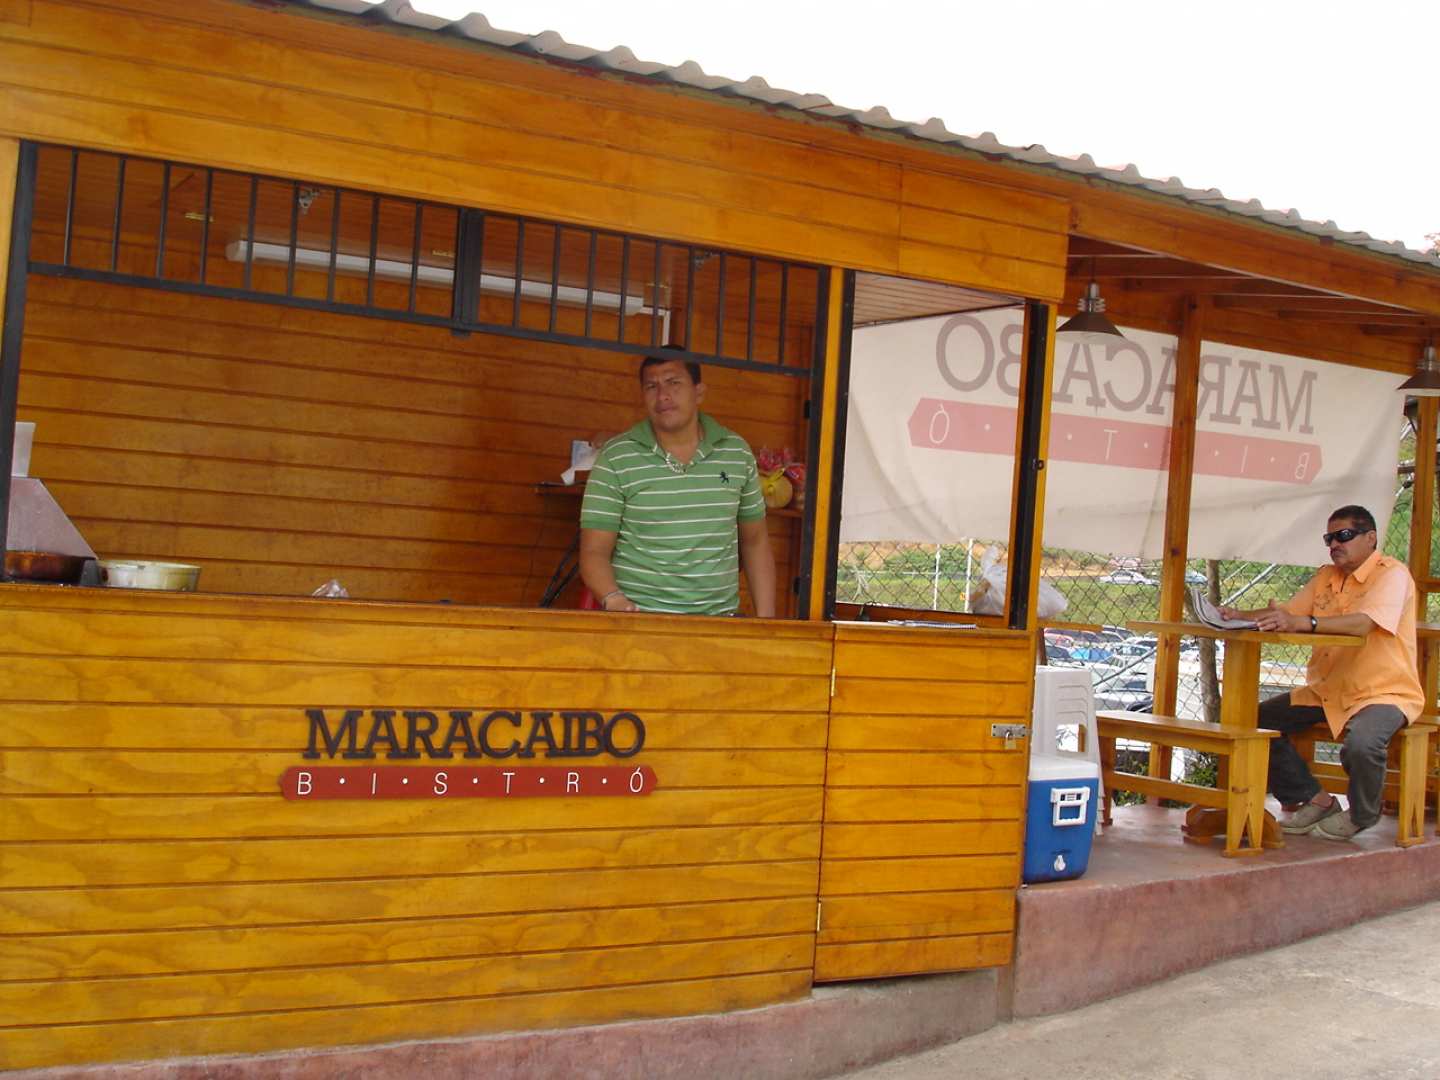 Maracaibo Bistro